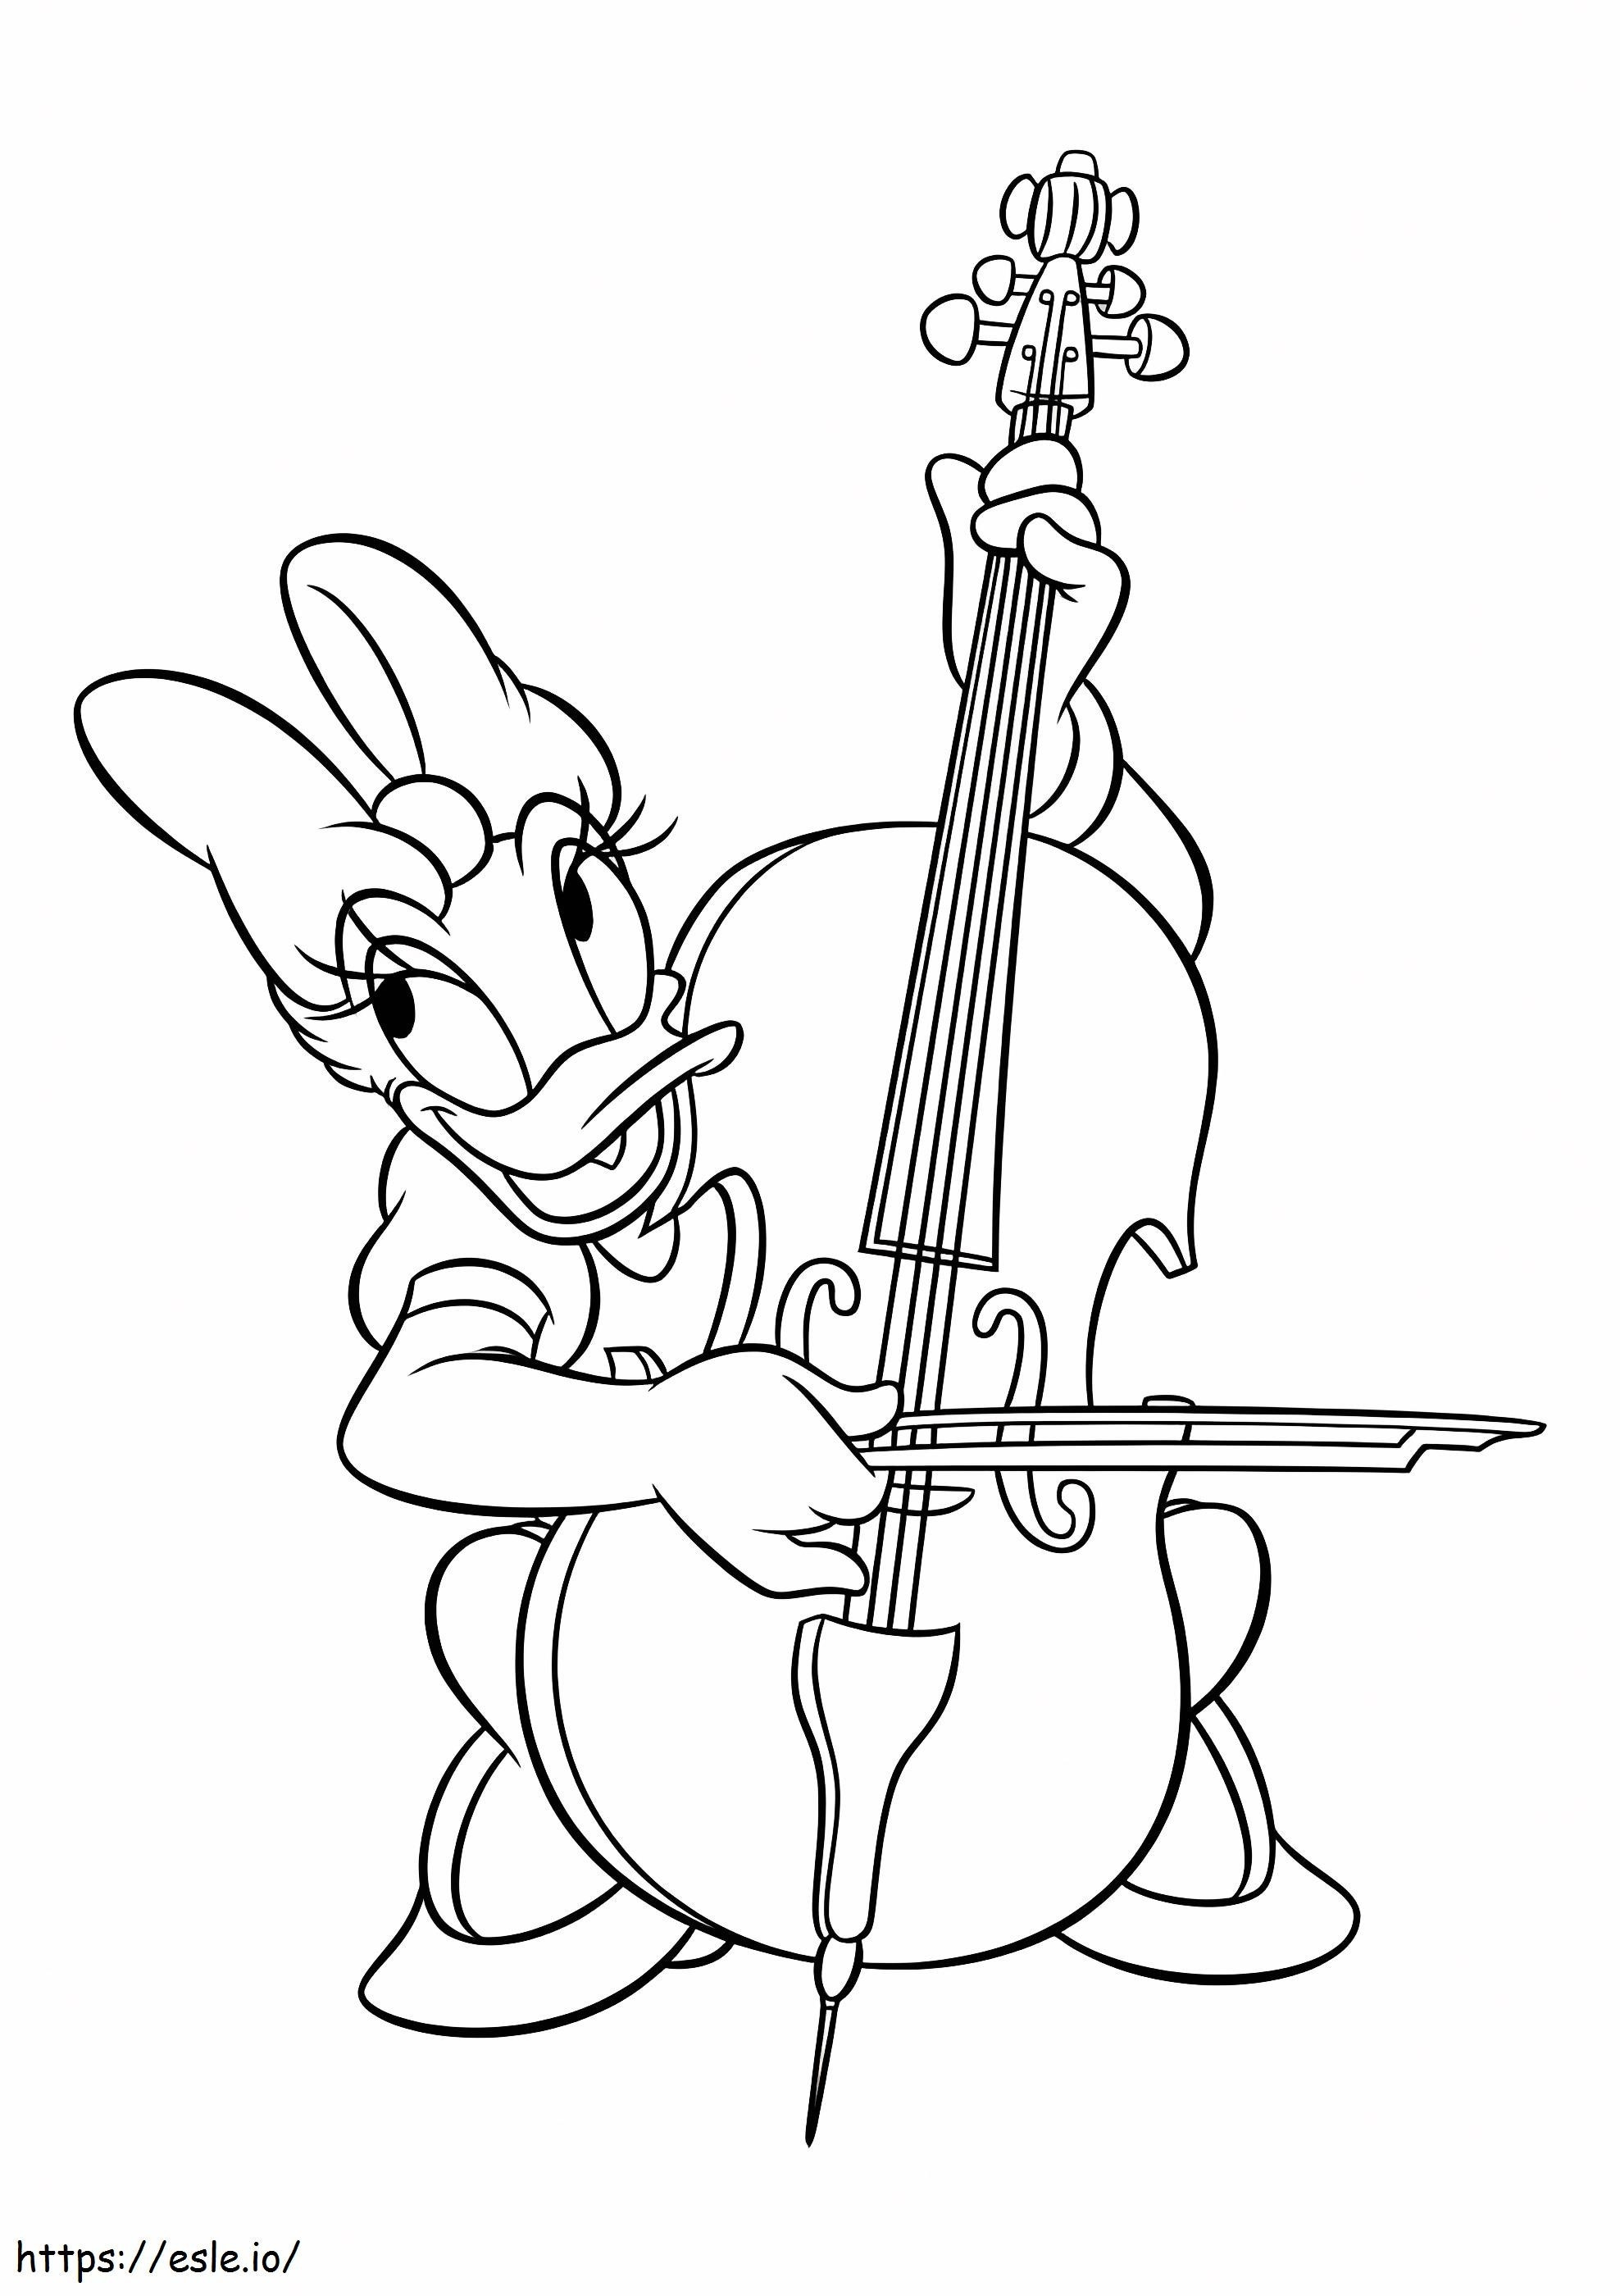 Margarida tocando violoncelo para colorir